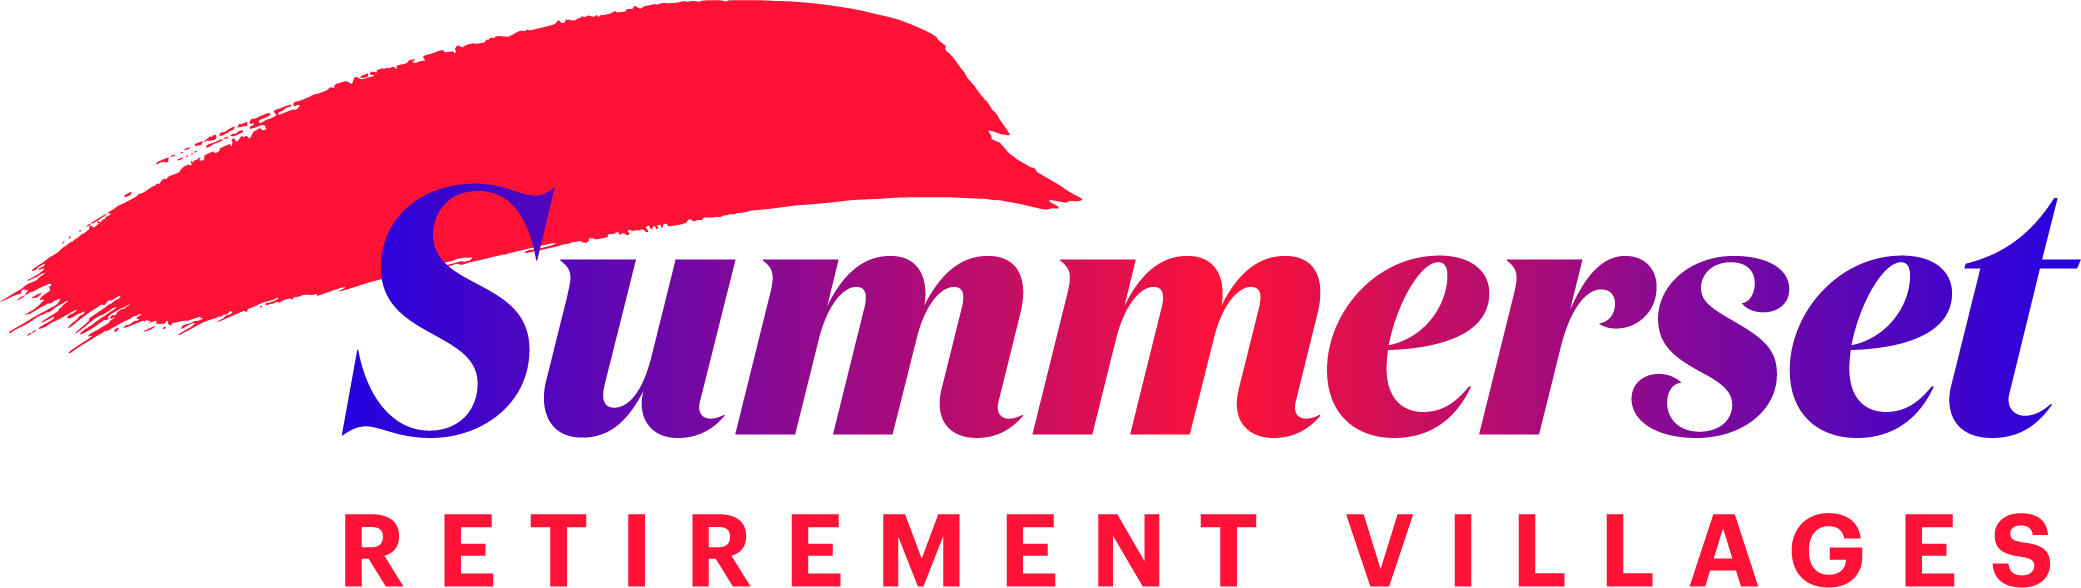 Summerset logo.jpg